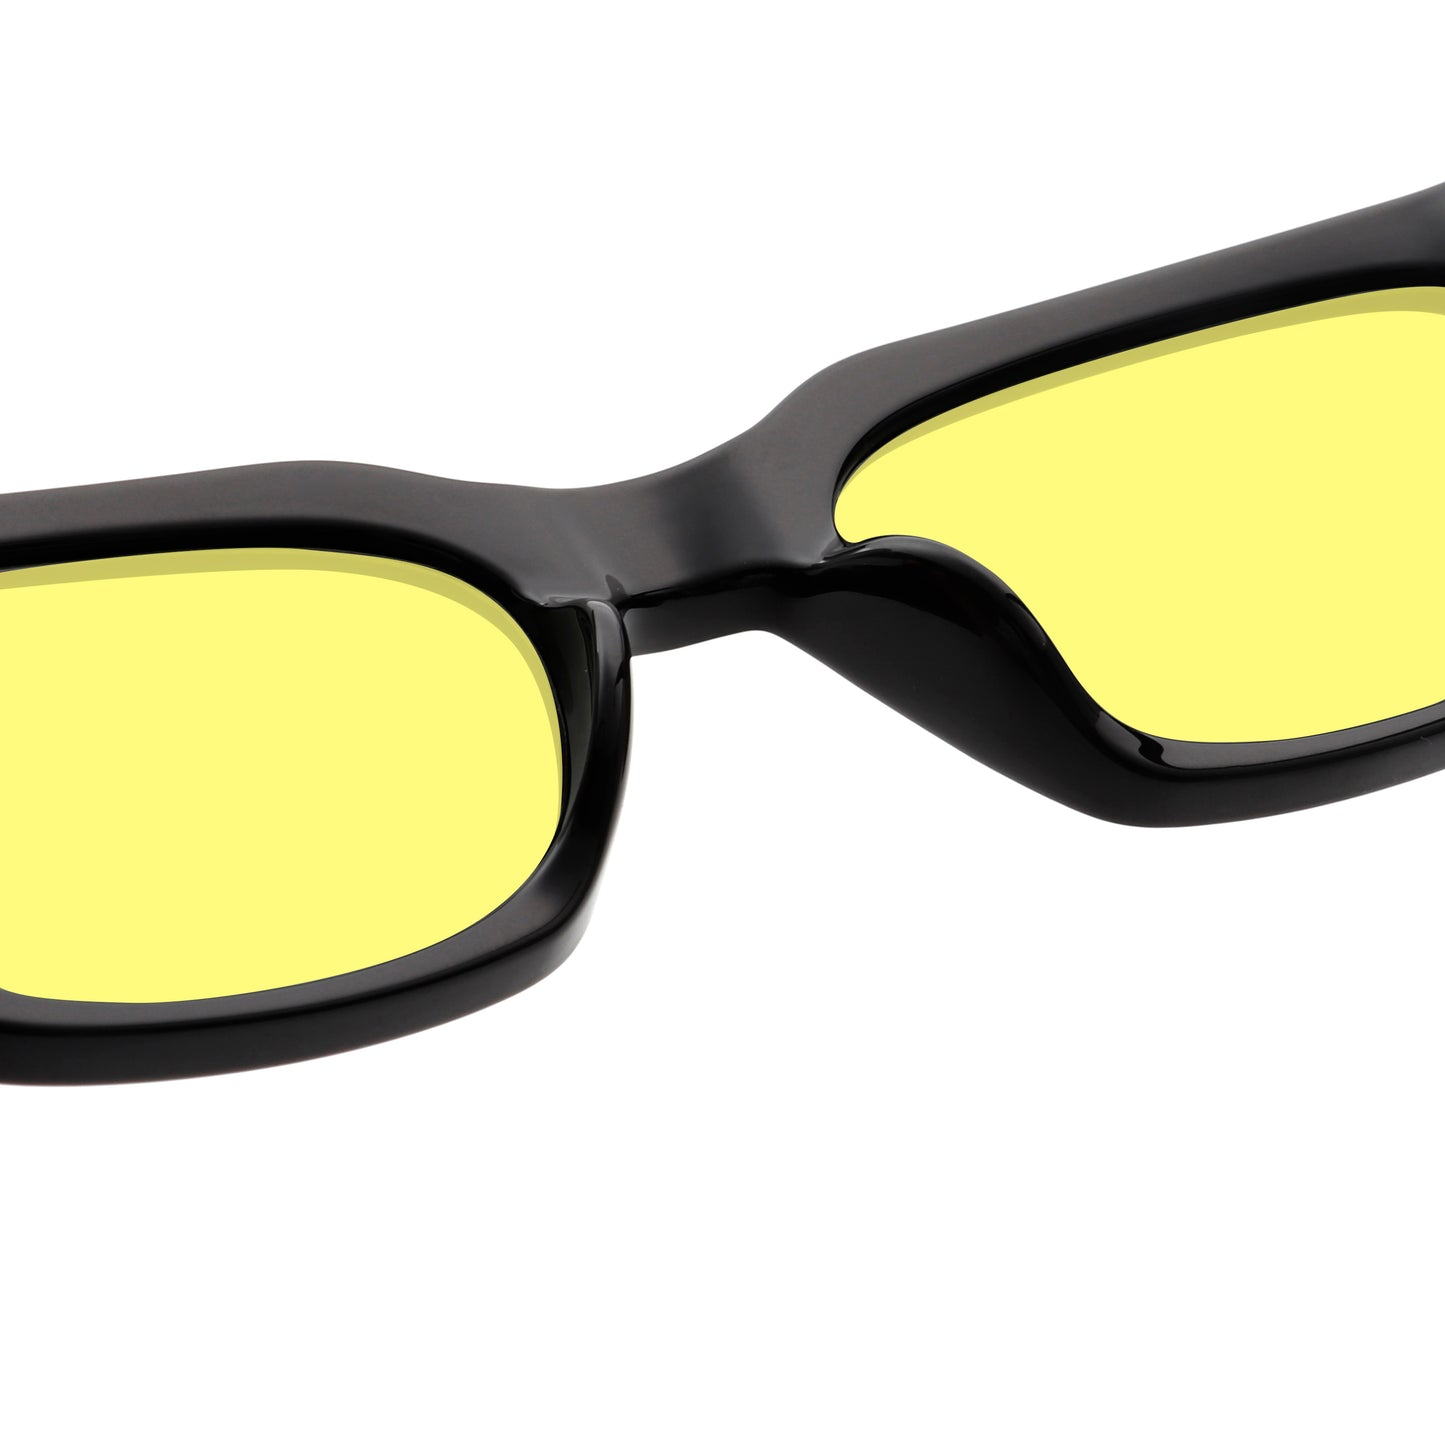 A.Kjaerbede Bror Sunglasses in Black & Yellow color